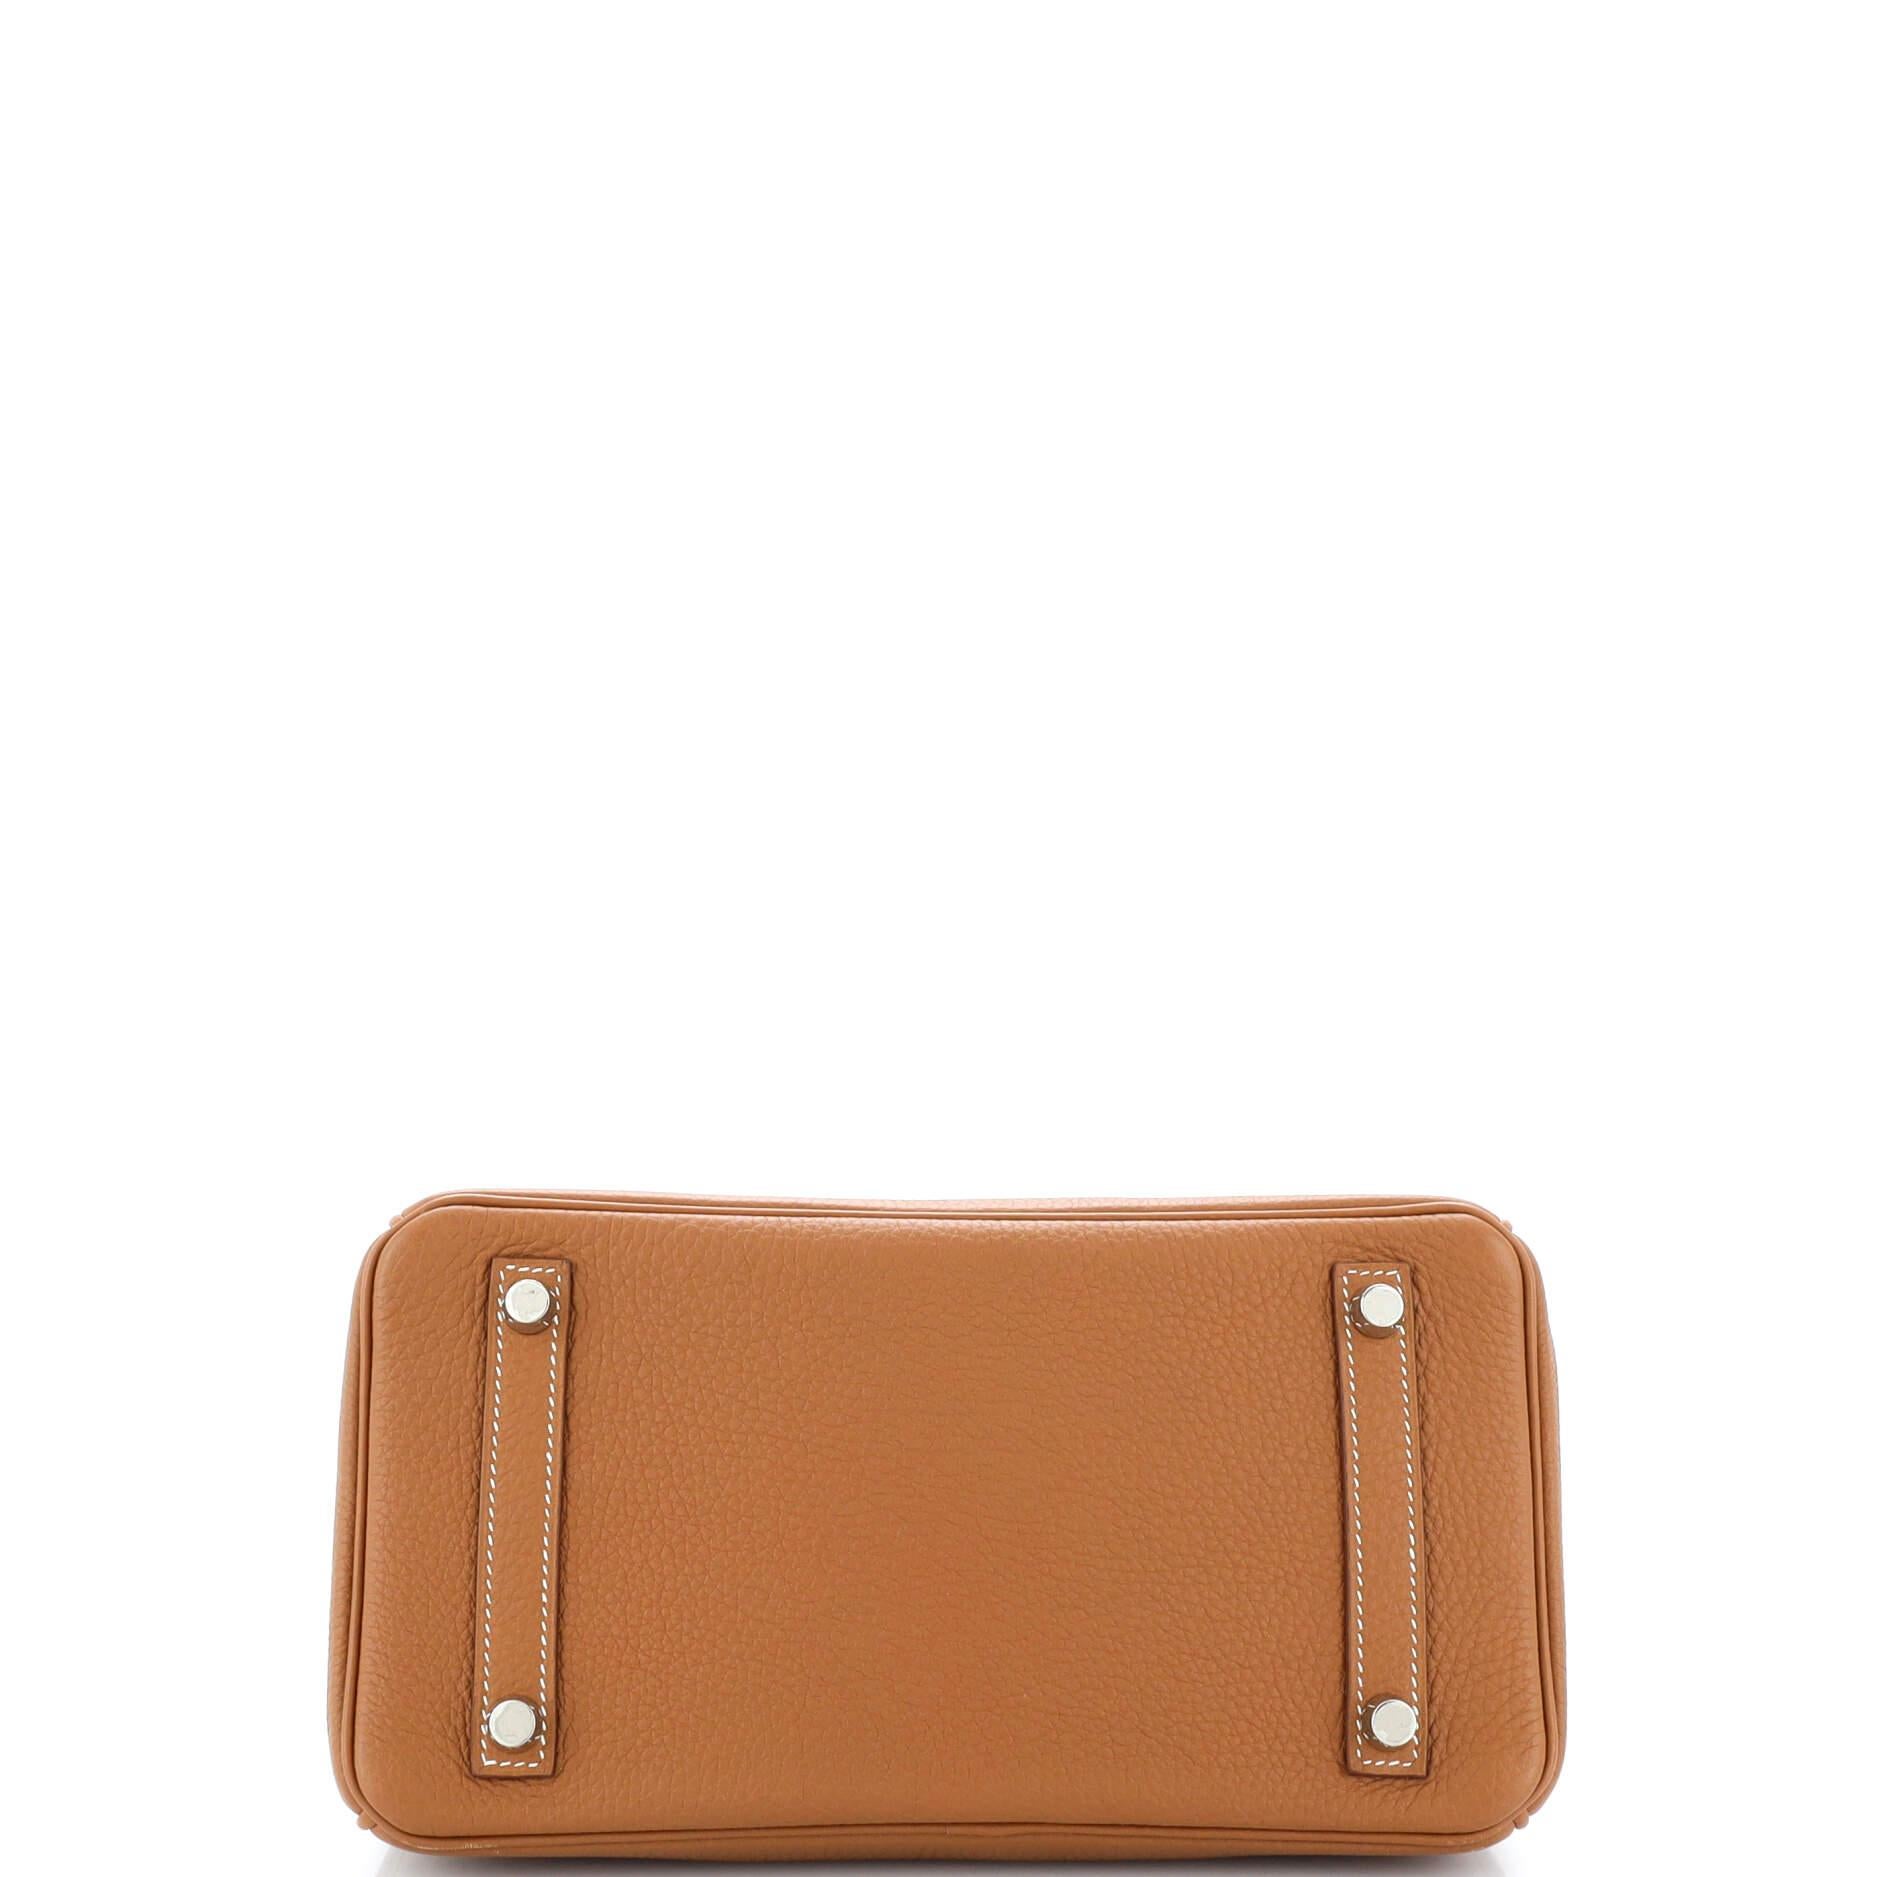 Hermes Birkin Handbag Gold Togo with Palladium Hardware 25 1